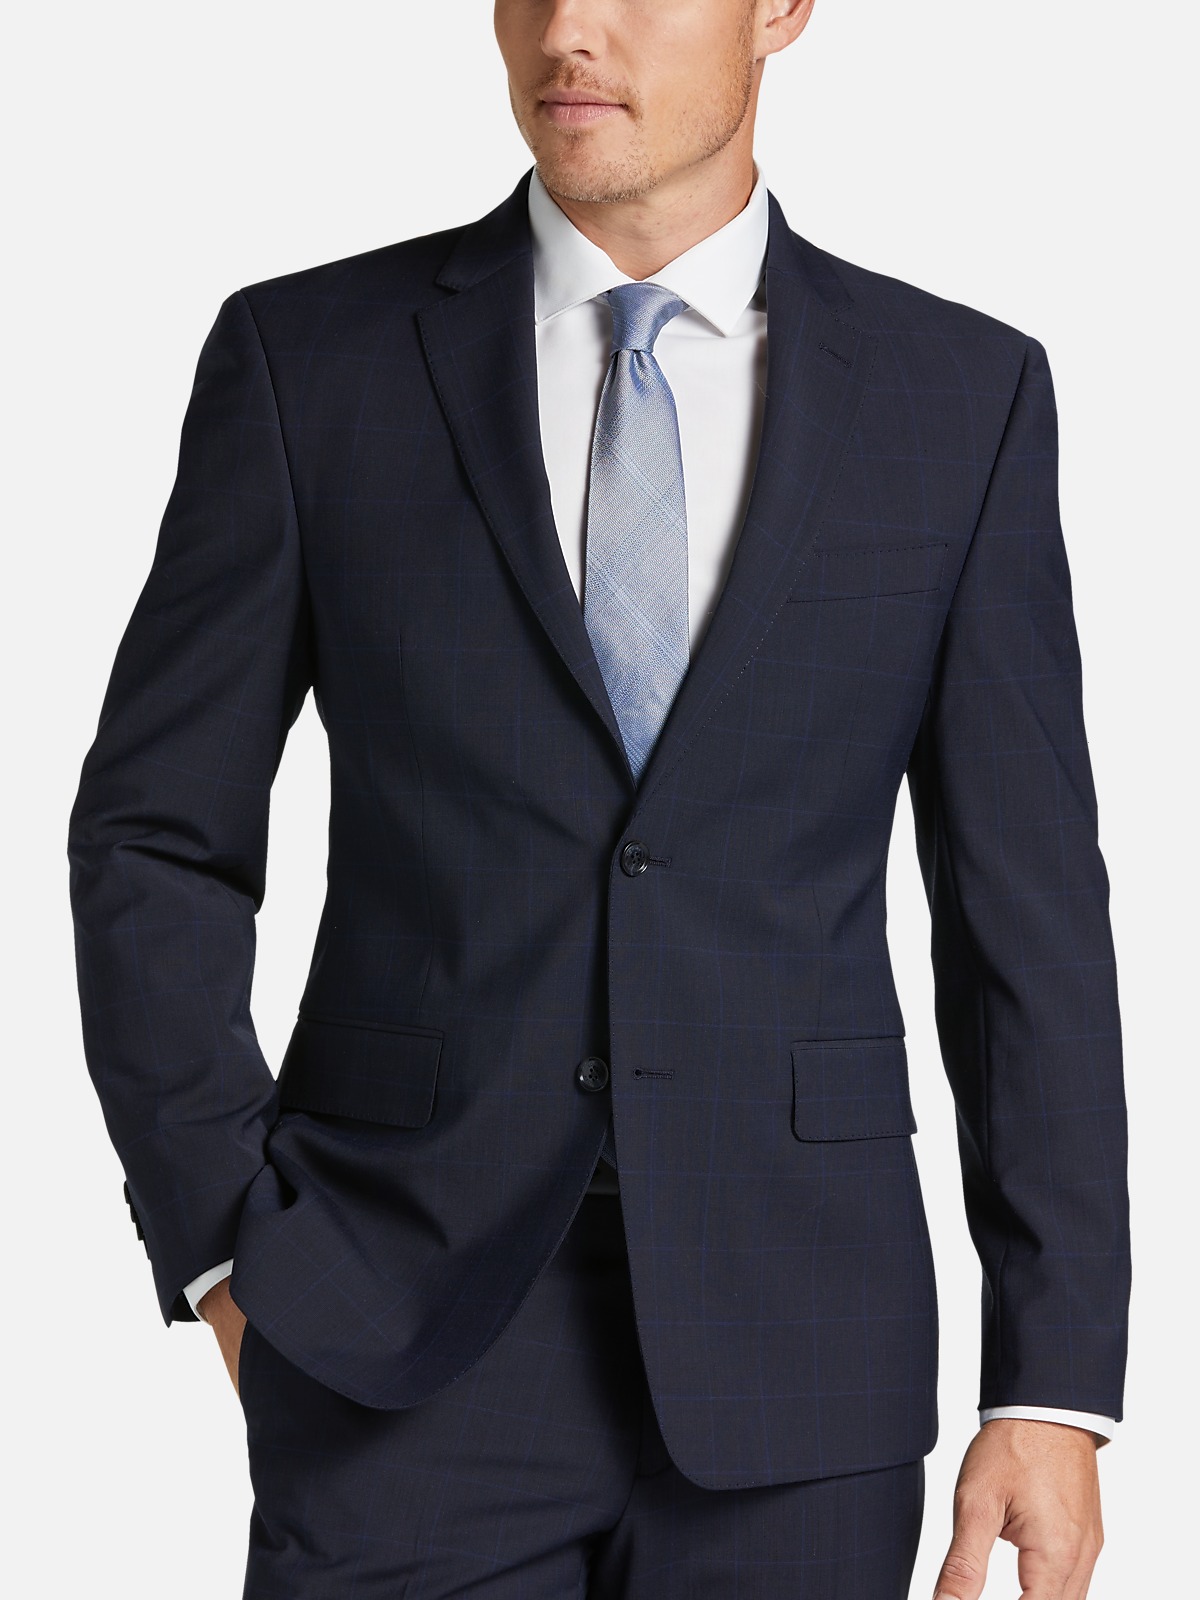 Tommy Hilfiger Modern Fit Suit | All Sale| Men's Wearhouse